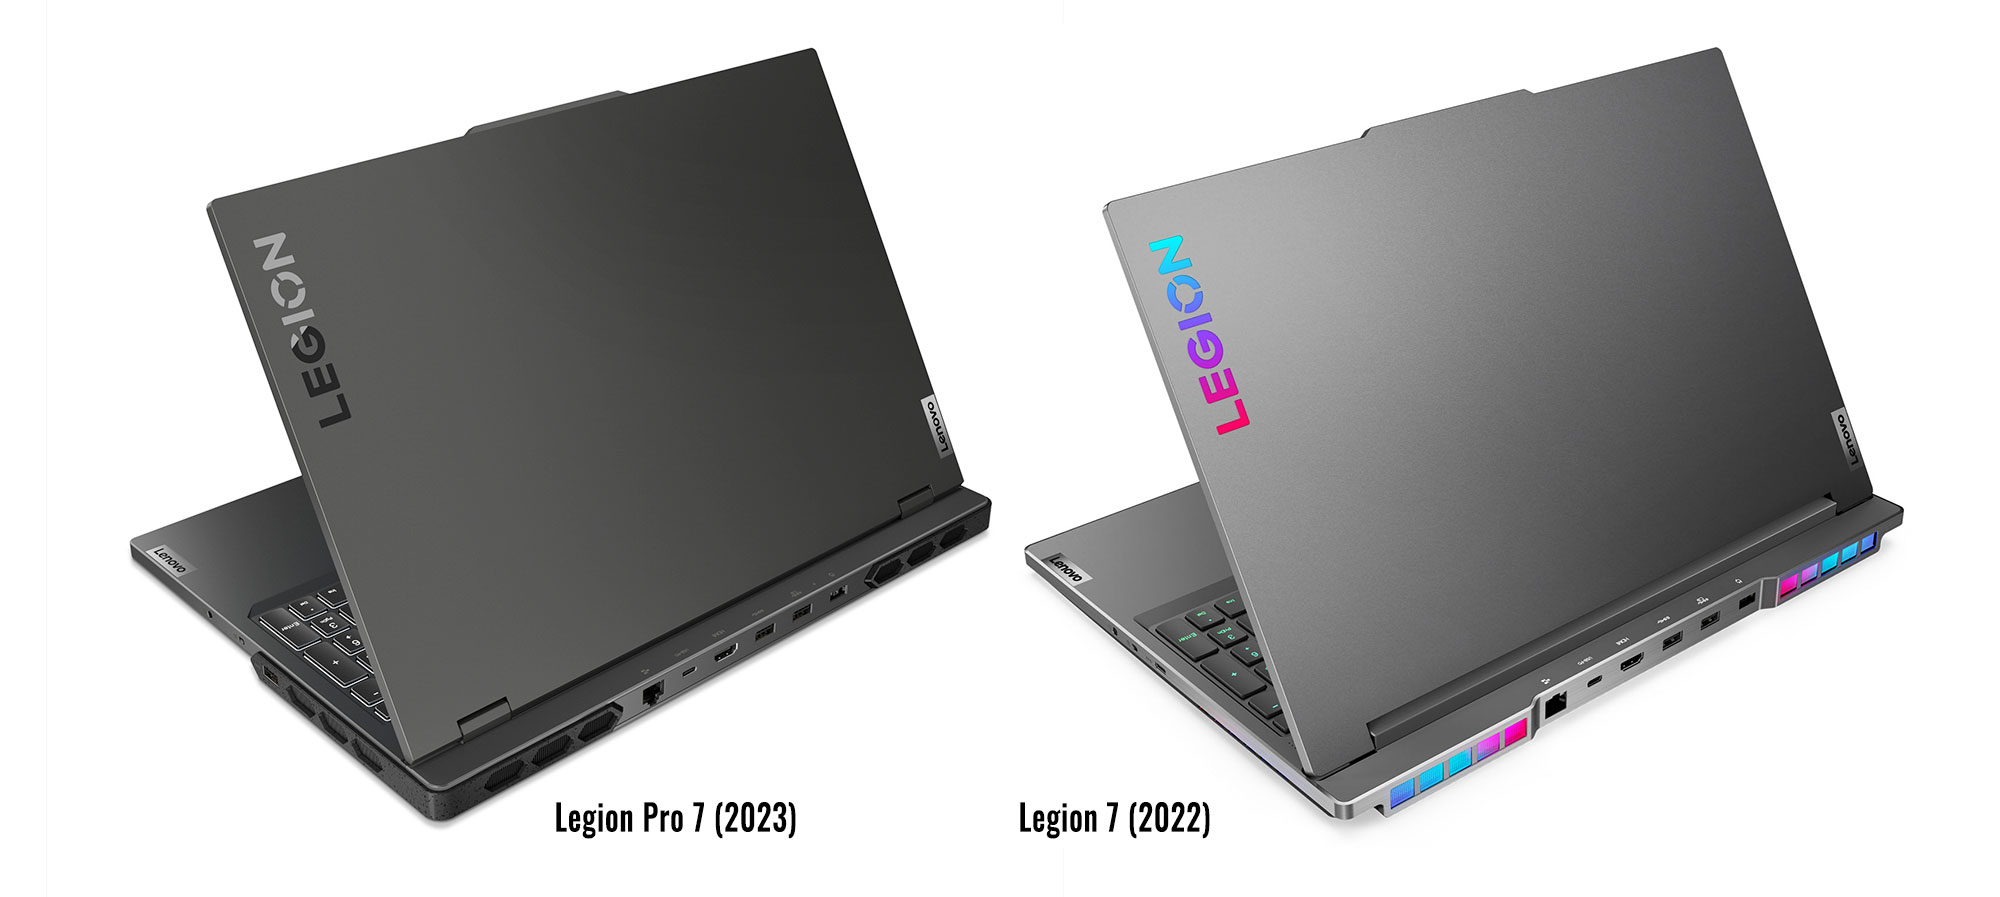 2023 Lenovo Legion Pro 7 (left) - 2022 Leobo Legion 7 (right)